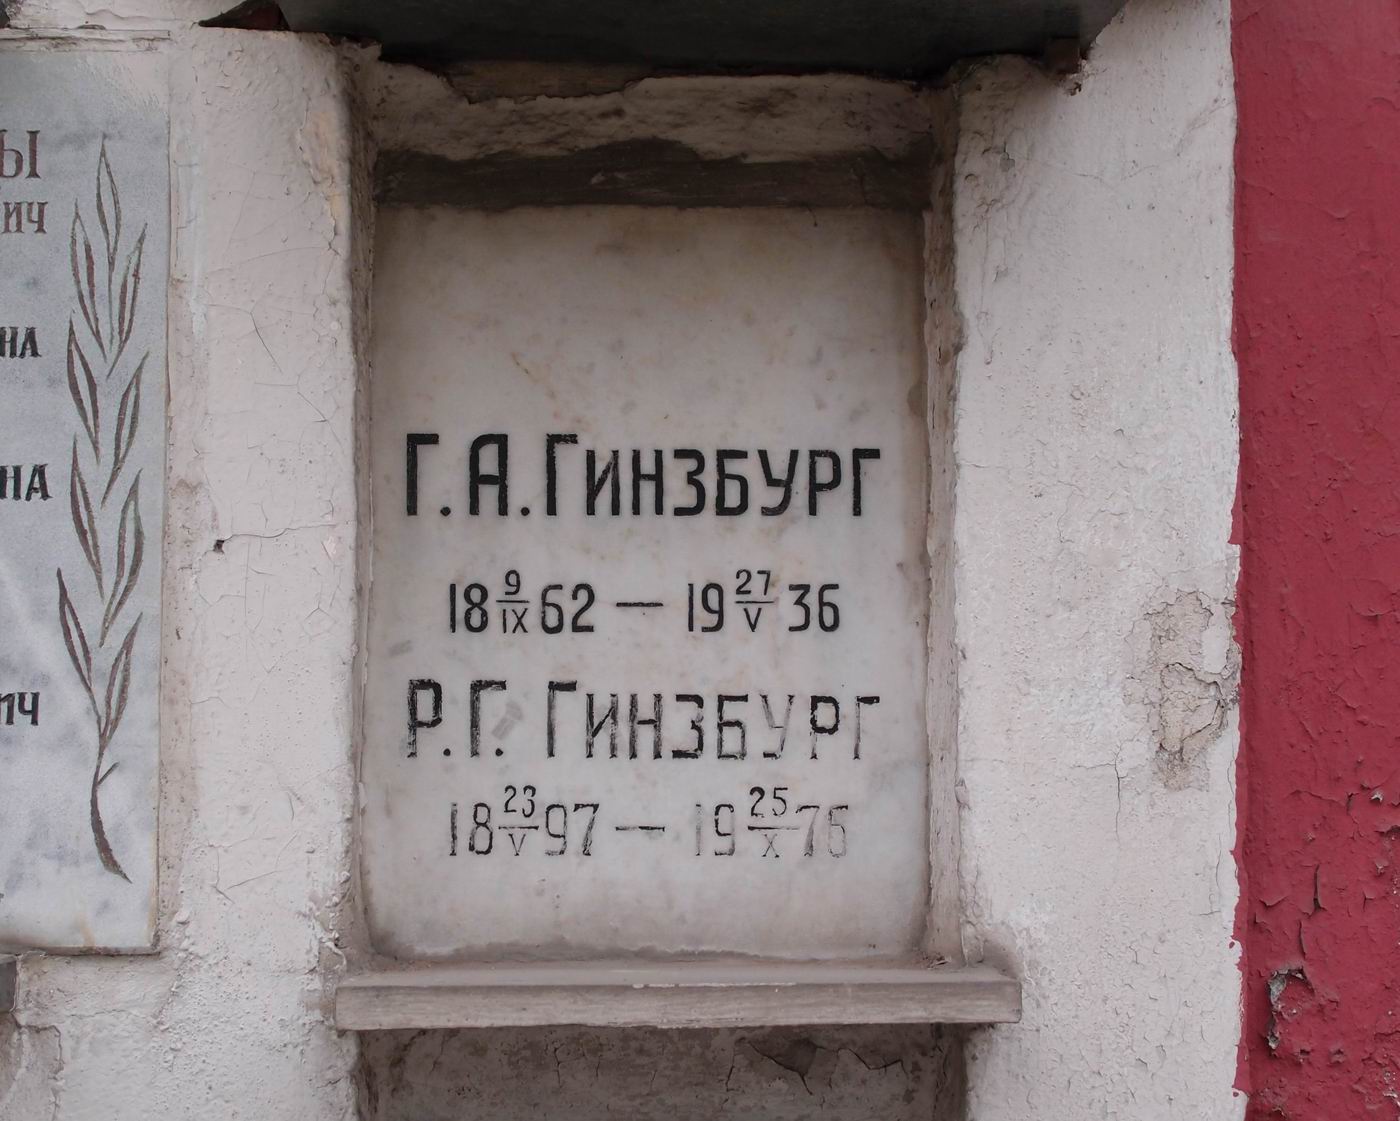 Плита на нише Гинзбург Г.А. (1862-1936), на Новодевичьем кладбище (колумбарий [35]-5-2).